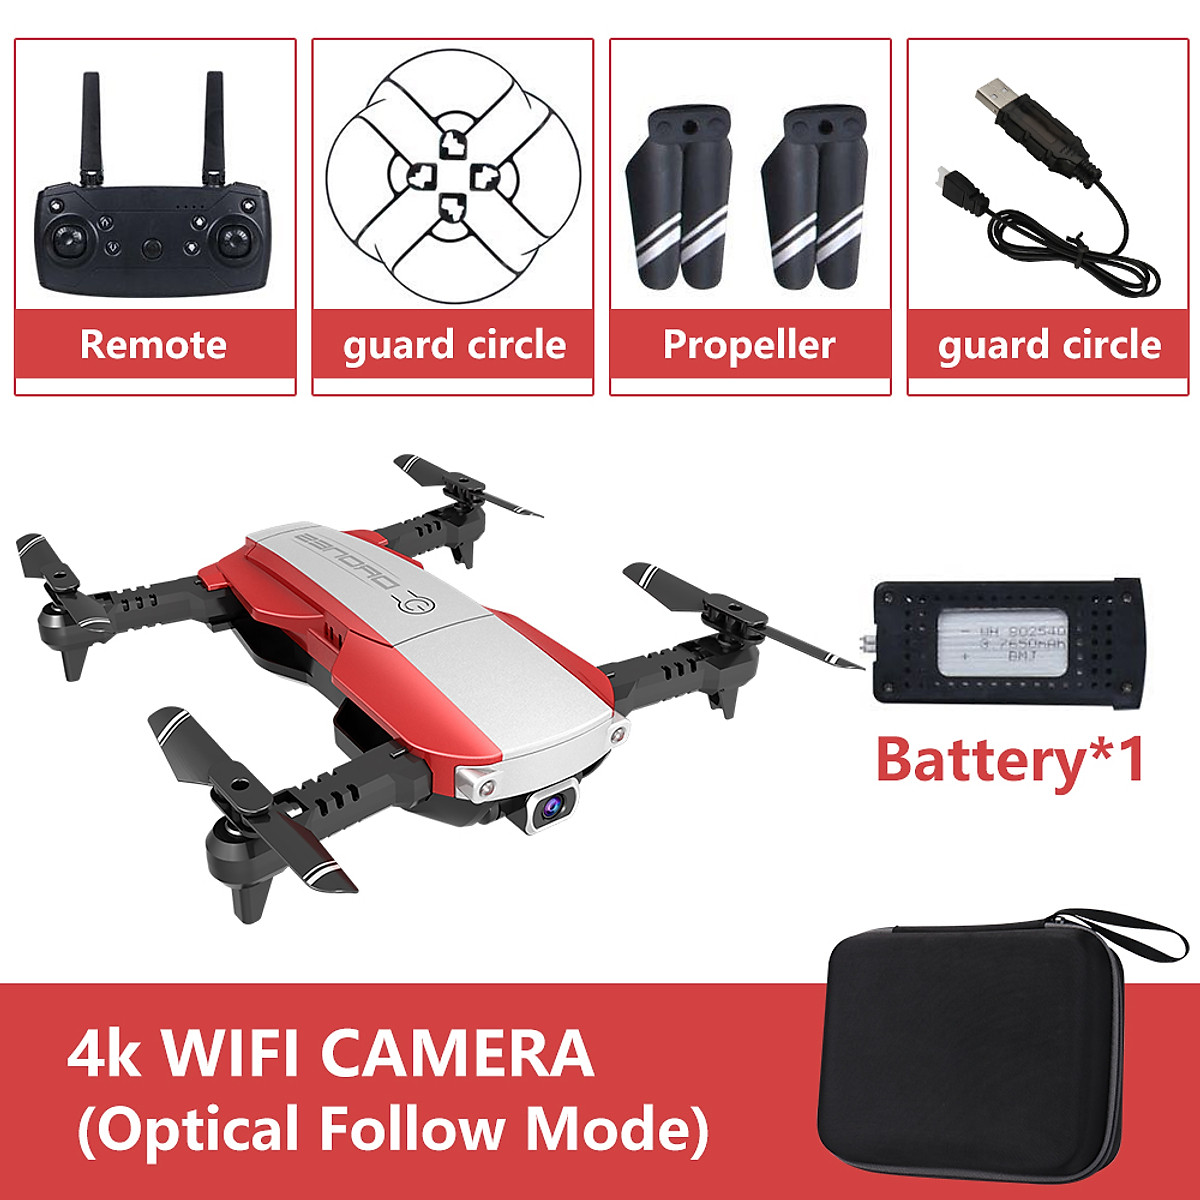 Drone X Pro WIFI FPV 4K HD Camera Foldable Selfie RC Quadcopter 1-3 Batteries√√√ 